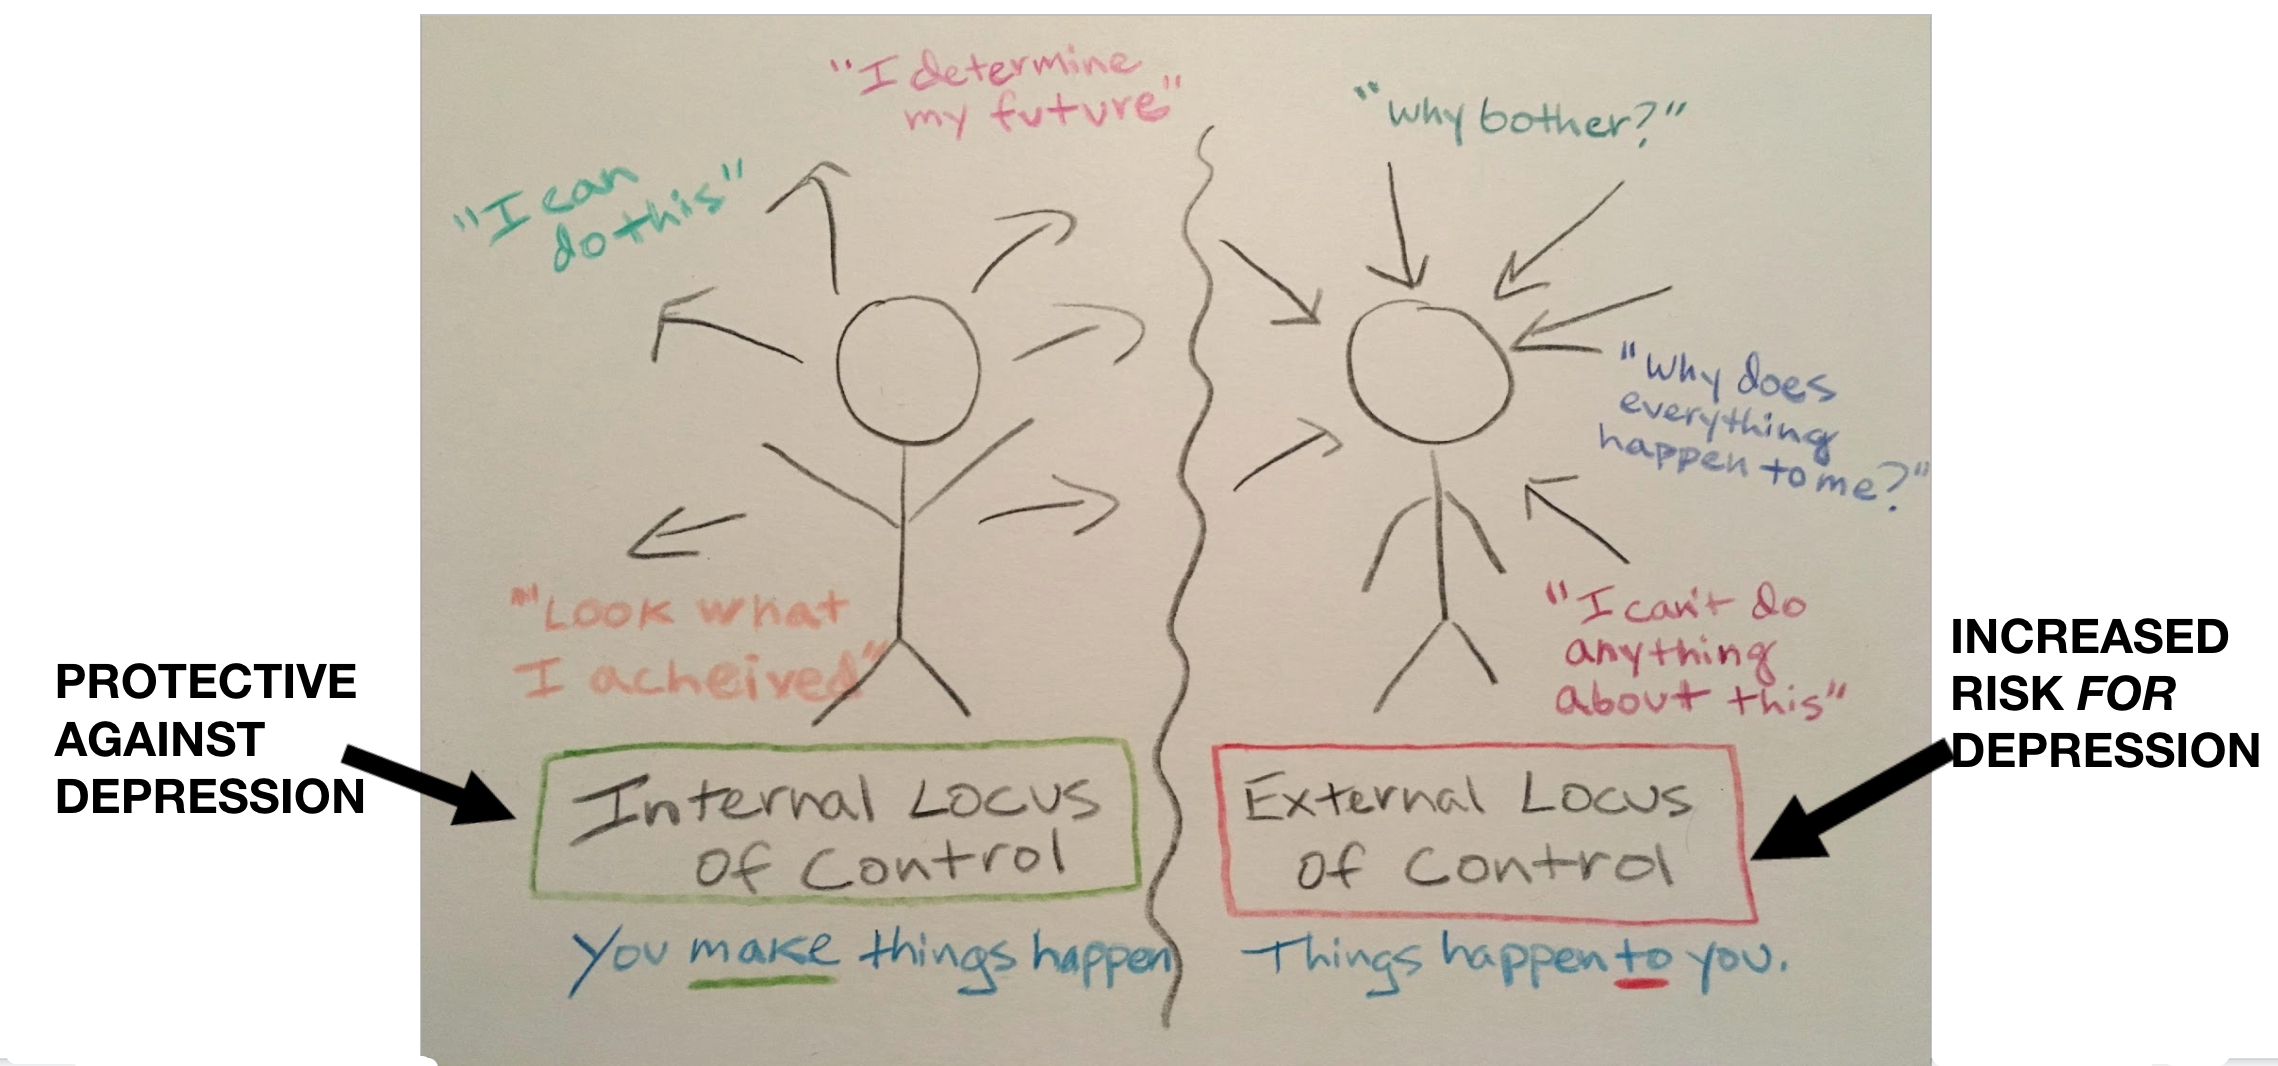 Internal versus external locus of control